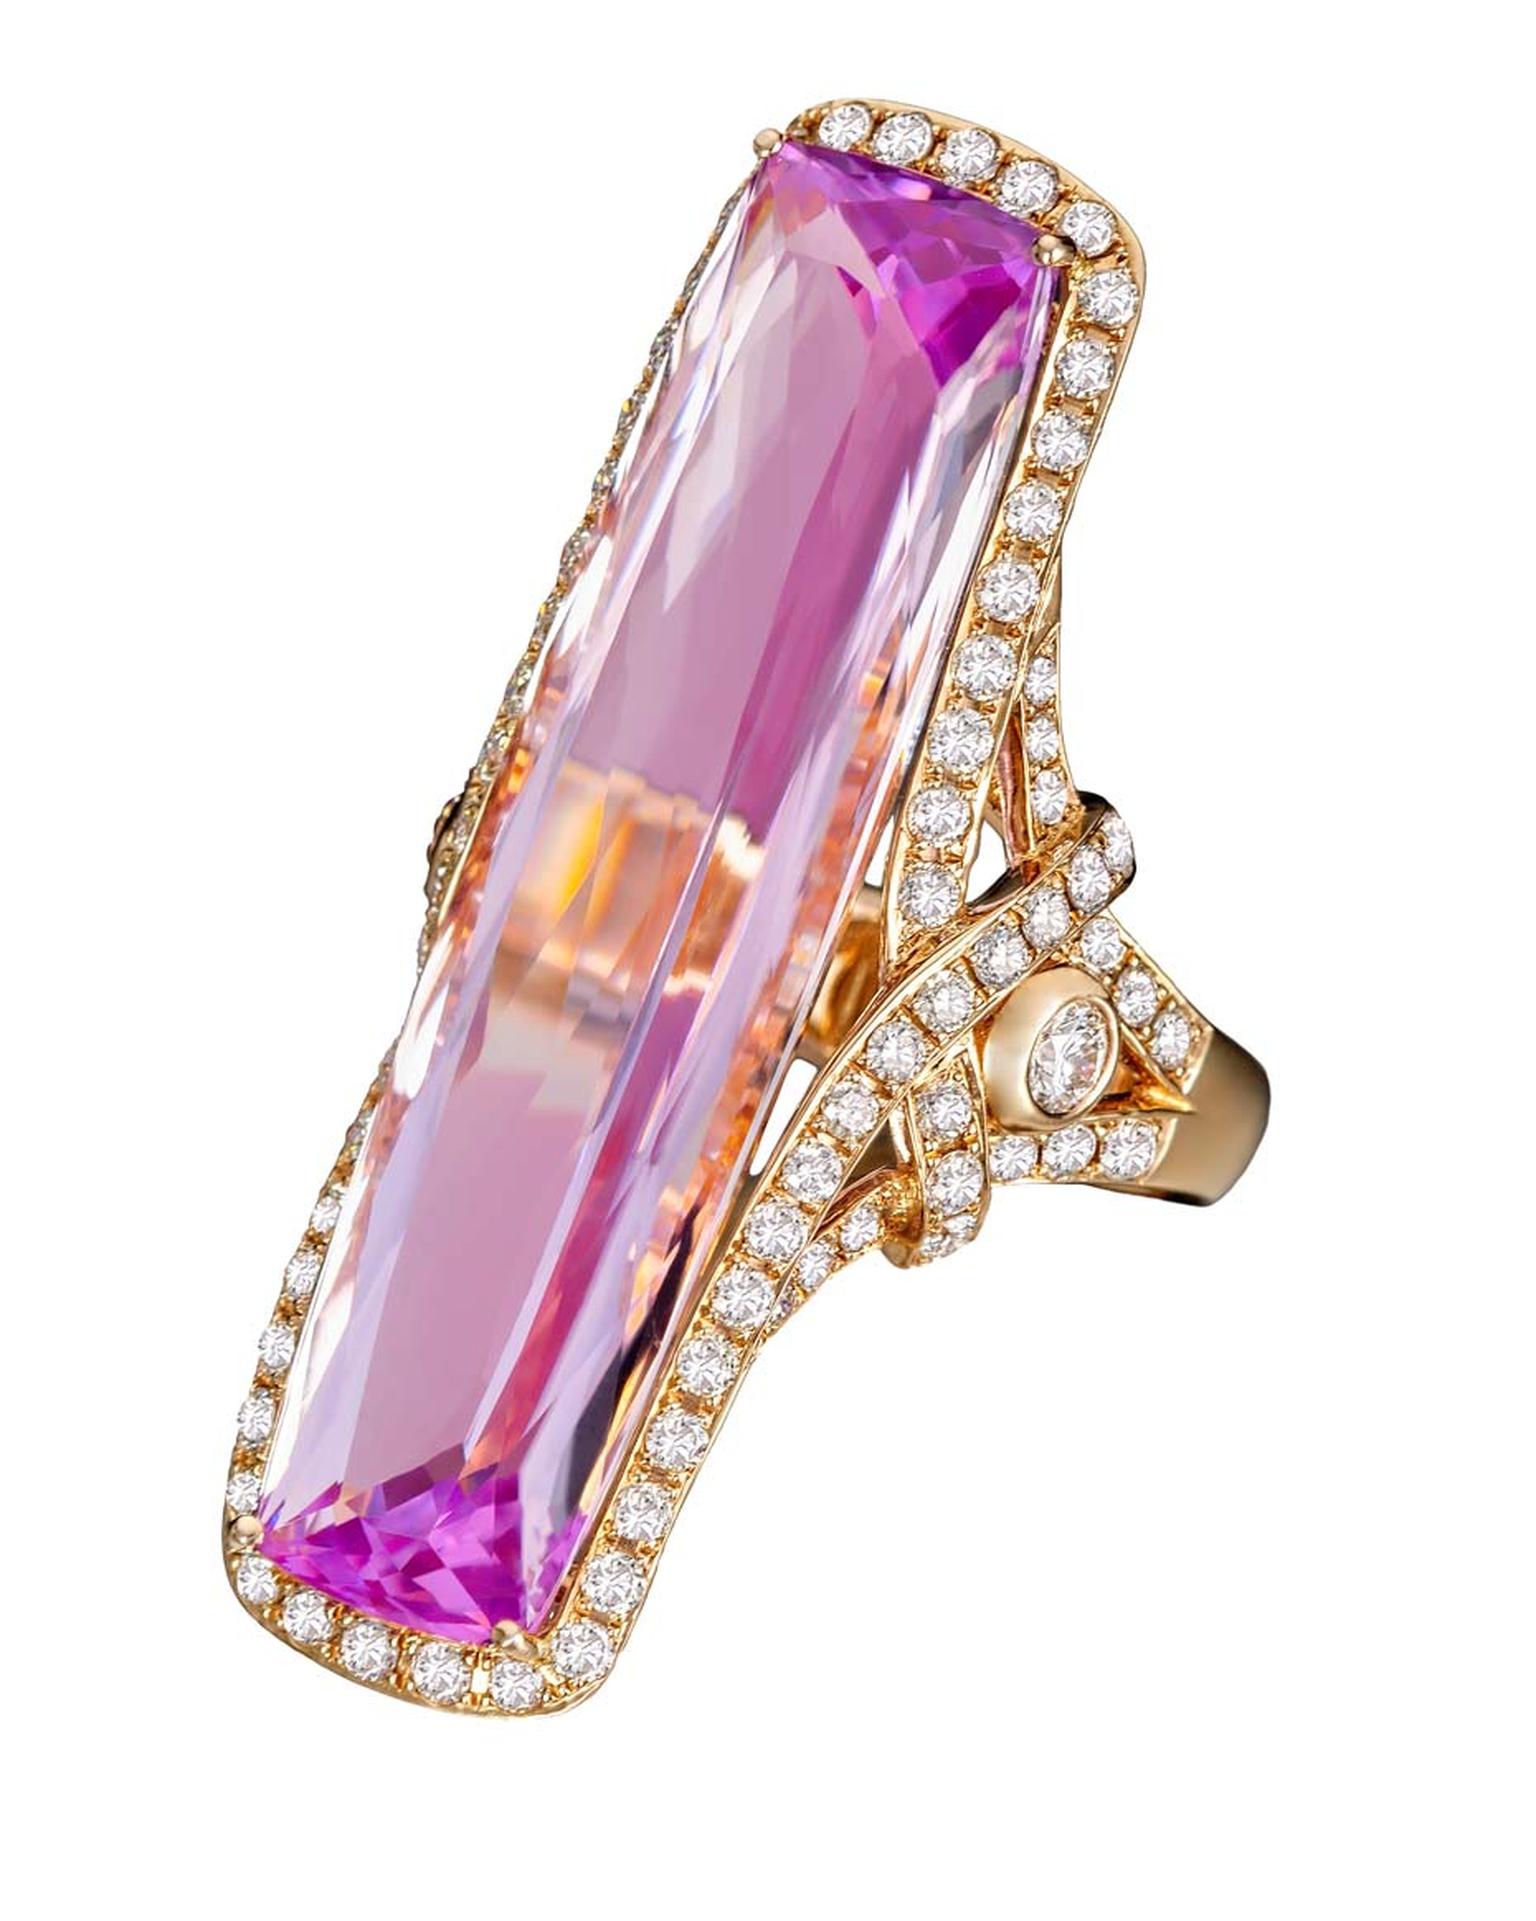 Margot McKinney 30.68ct baguette-cut pink kunzite ring with brilliant-cut white diamonds.